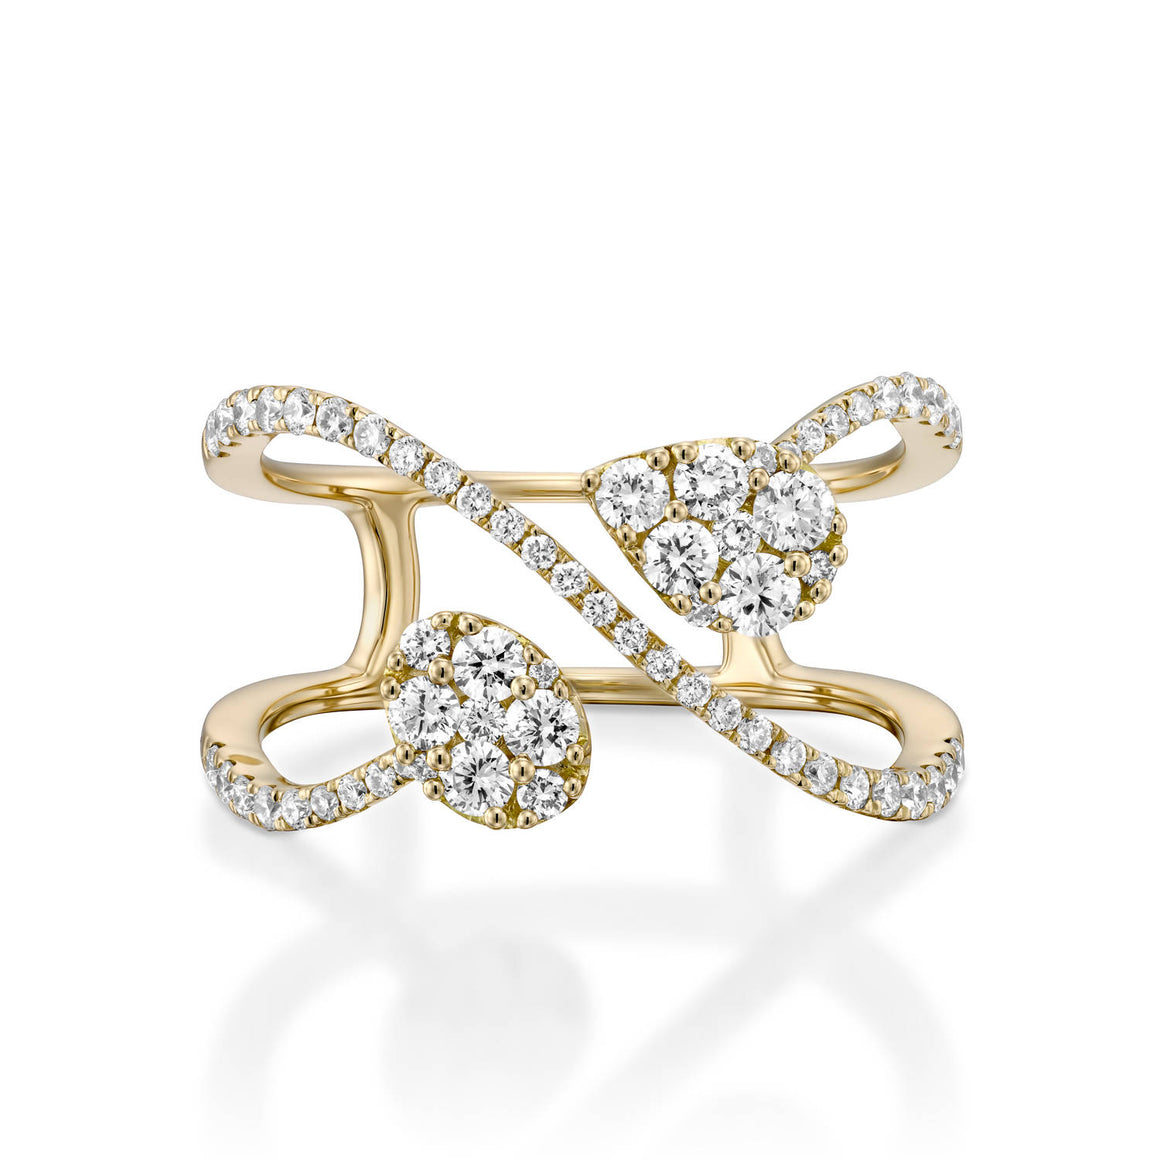 RNR18238-Unique women engagement ring Double diamond ring